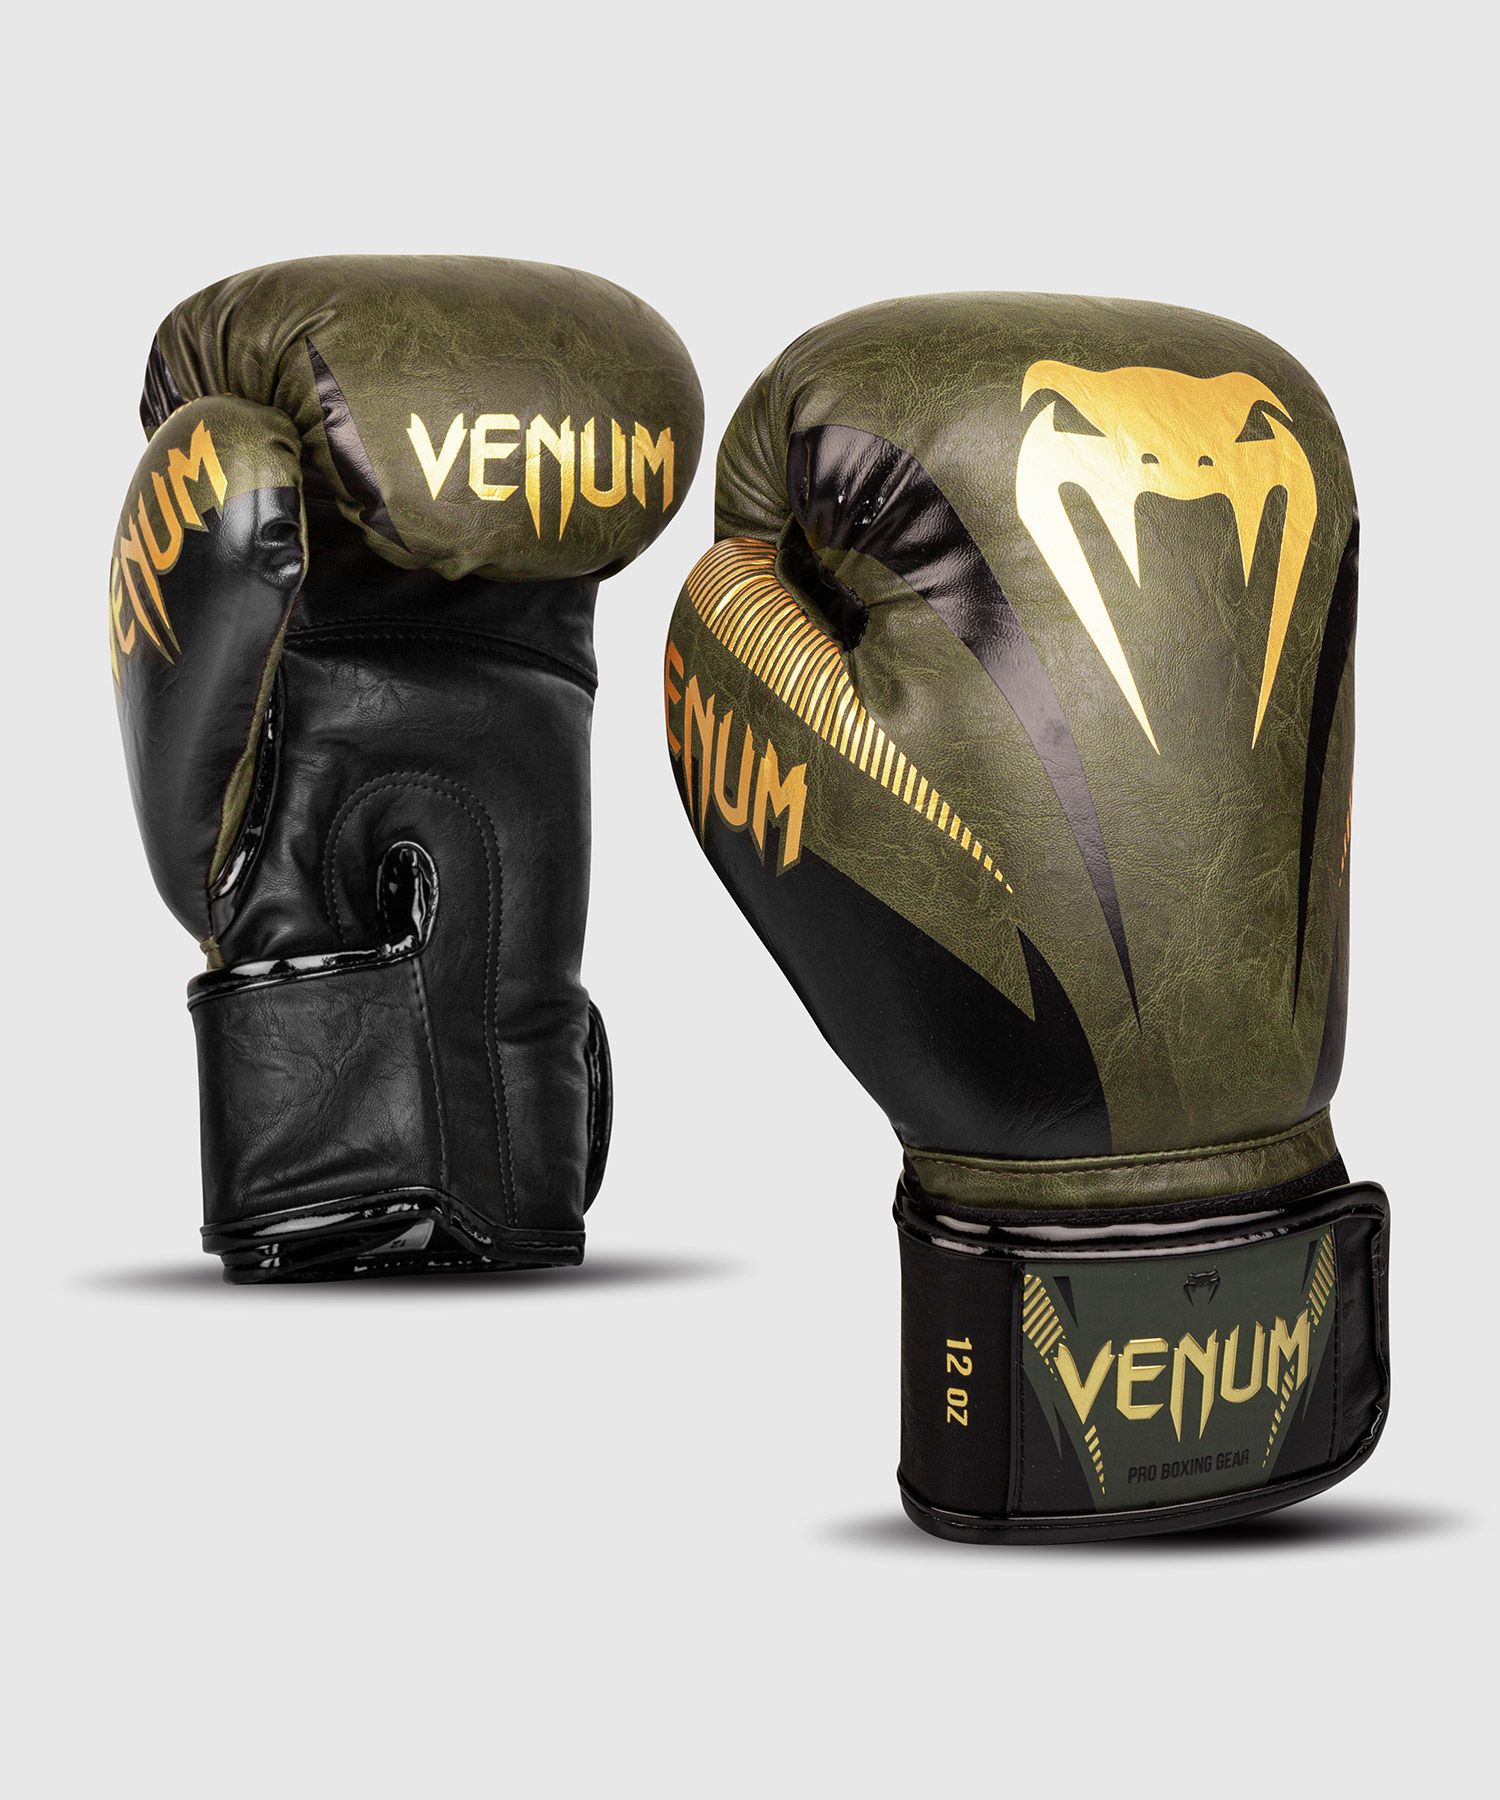 Venum Impact ボクシンググローブ - カーキ/ゴールド